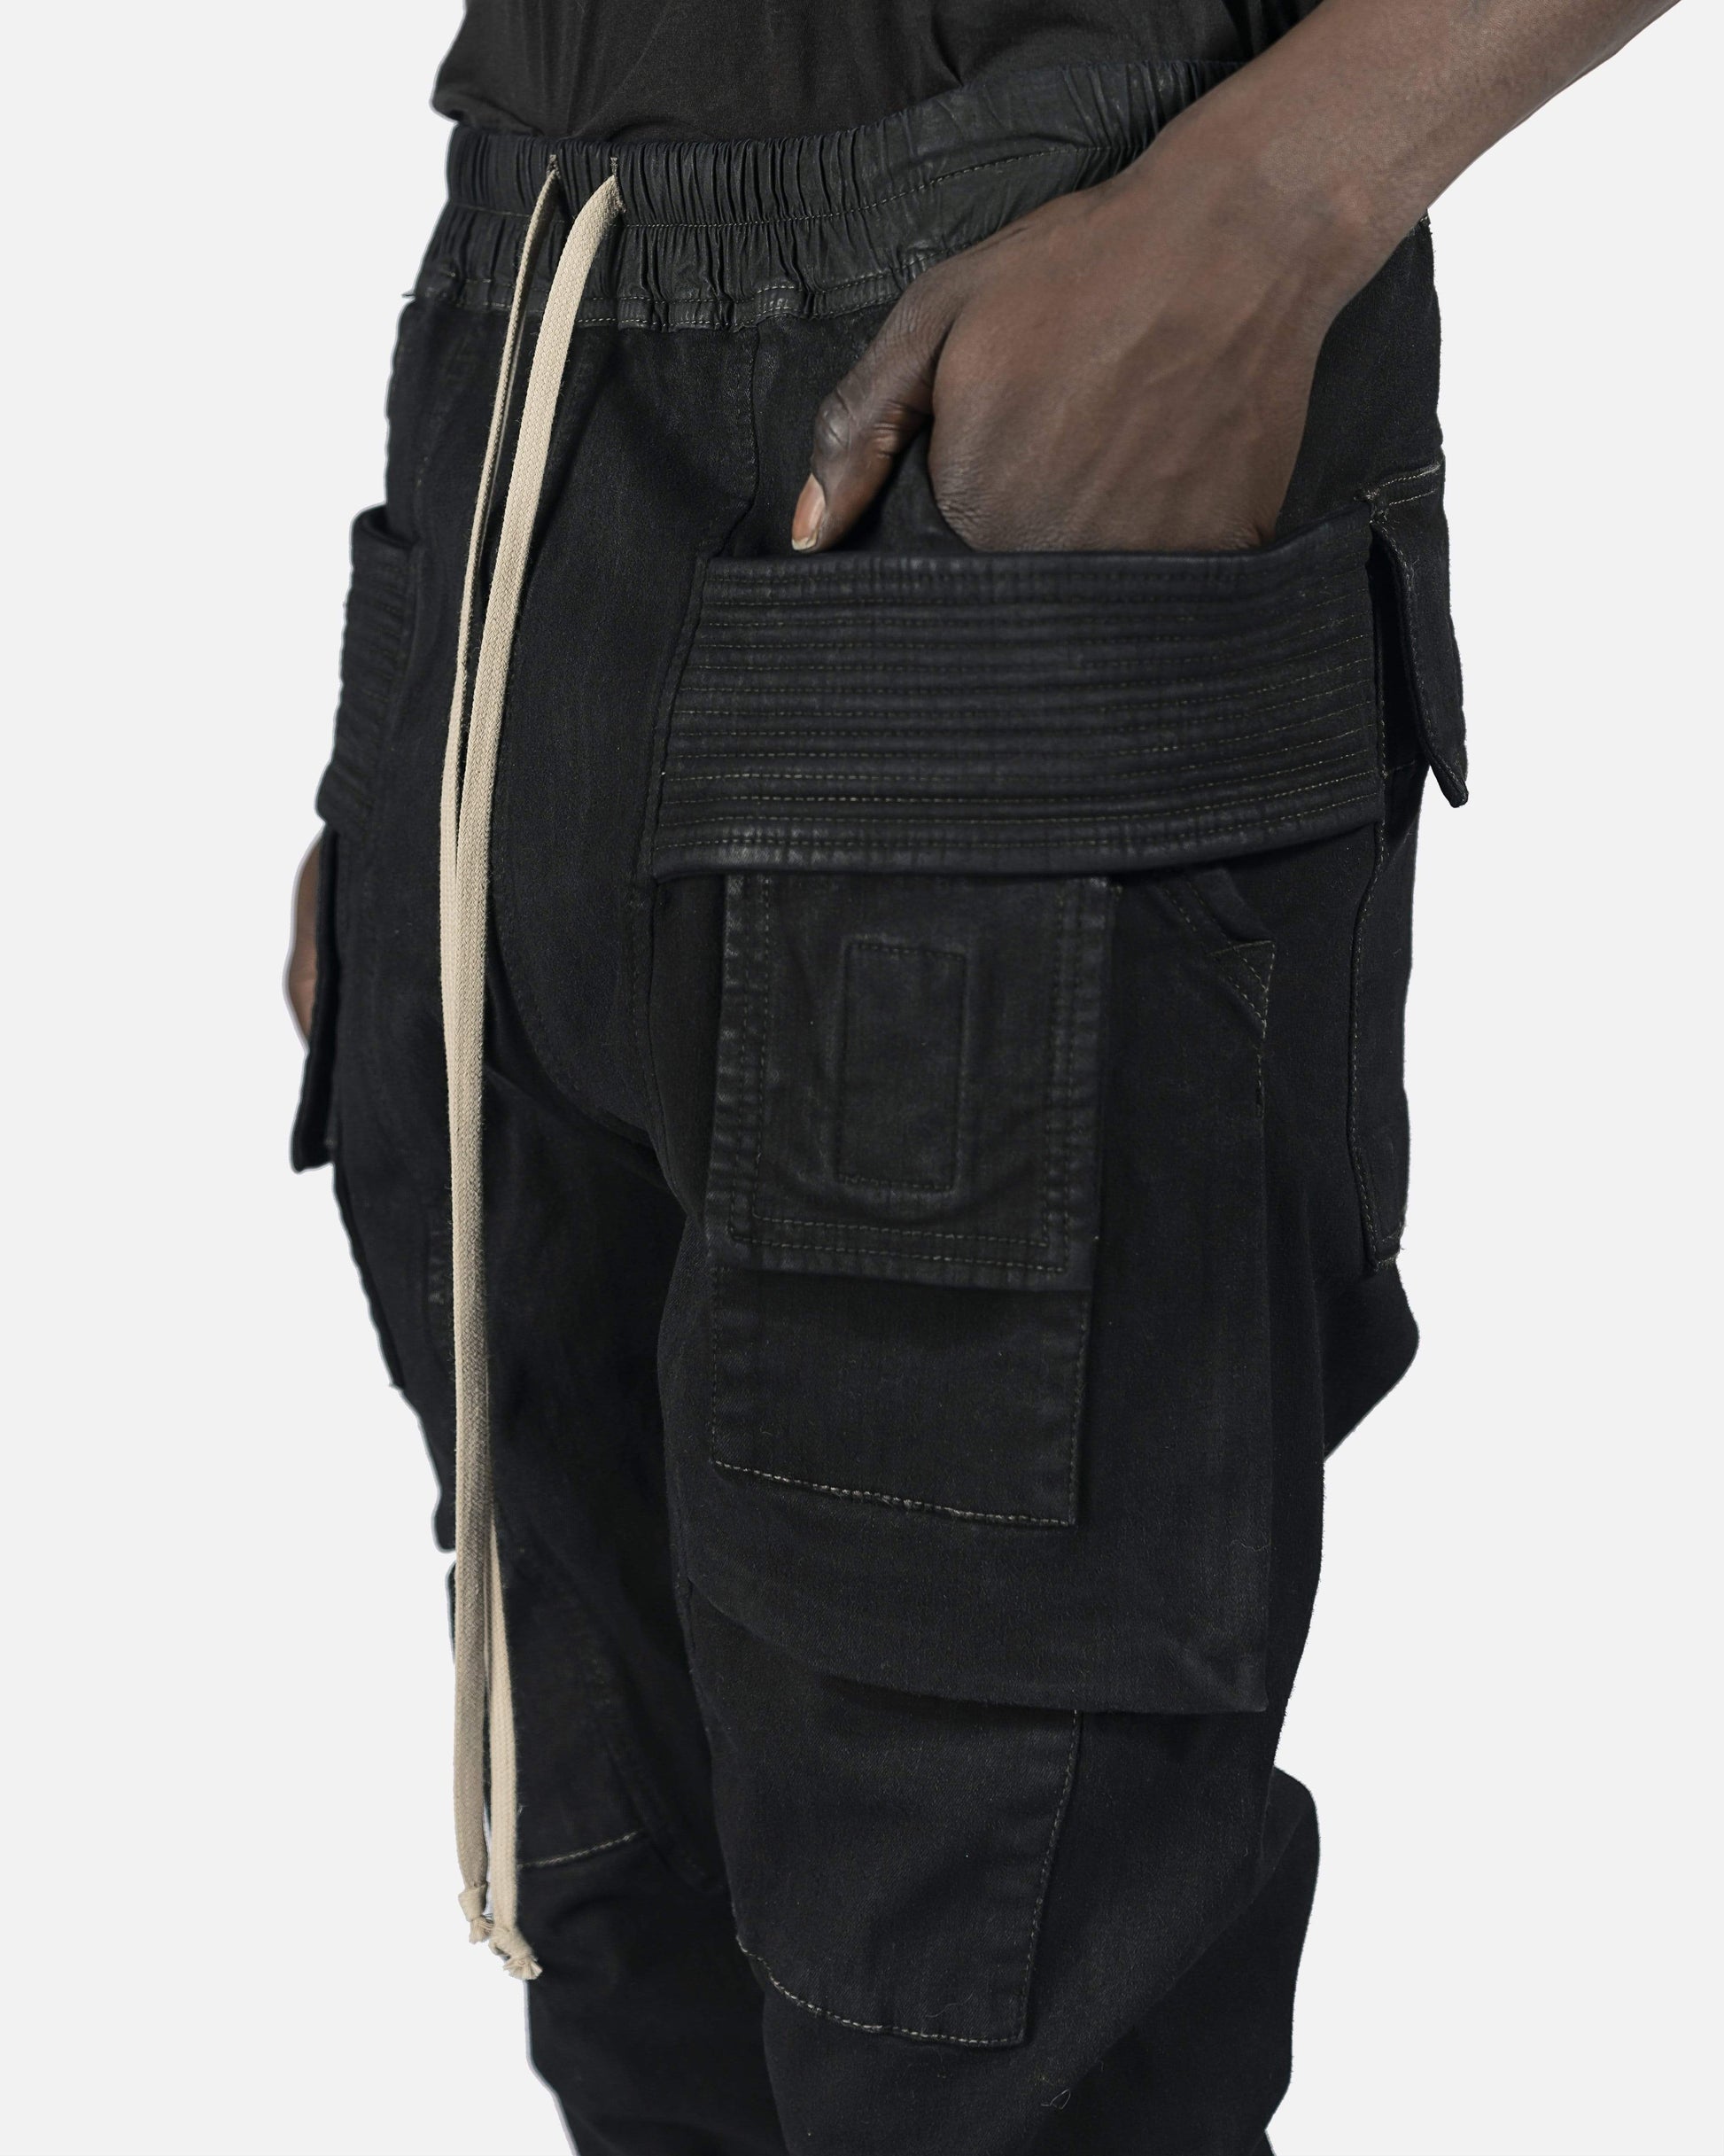 Rick Owens DRKSHDW Men's Pants Denim Creatch Cargo Drawstring in Black